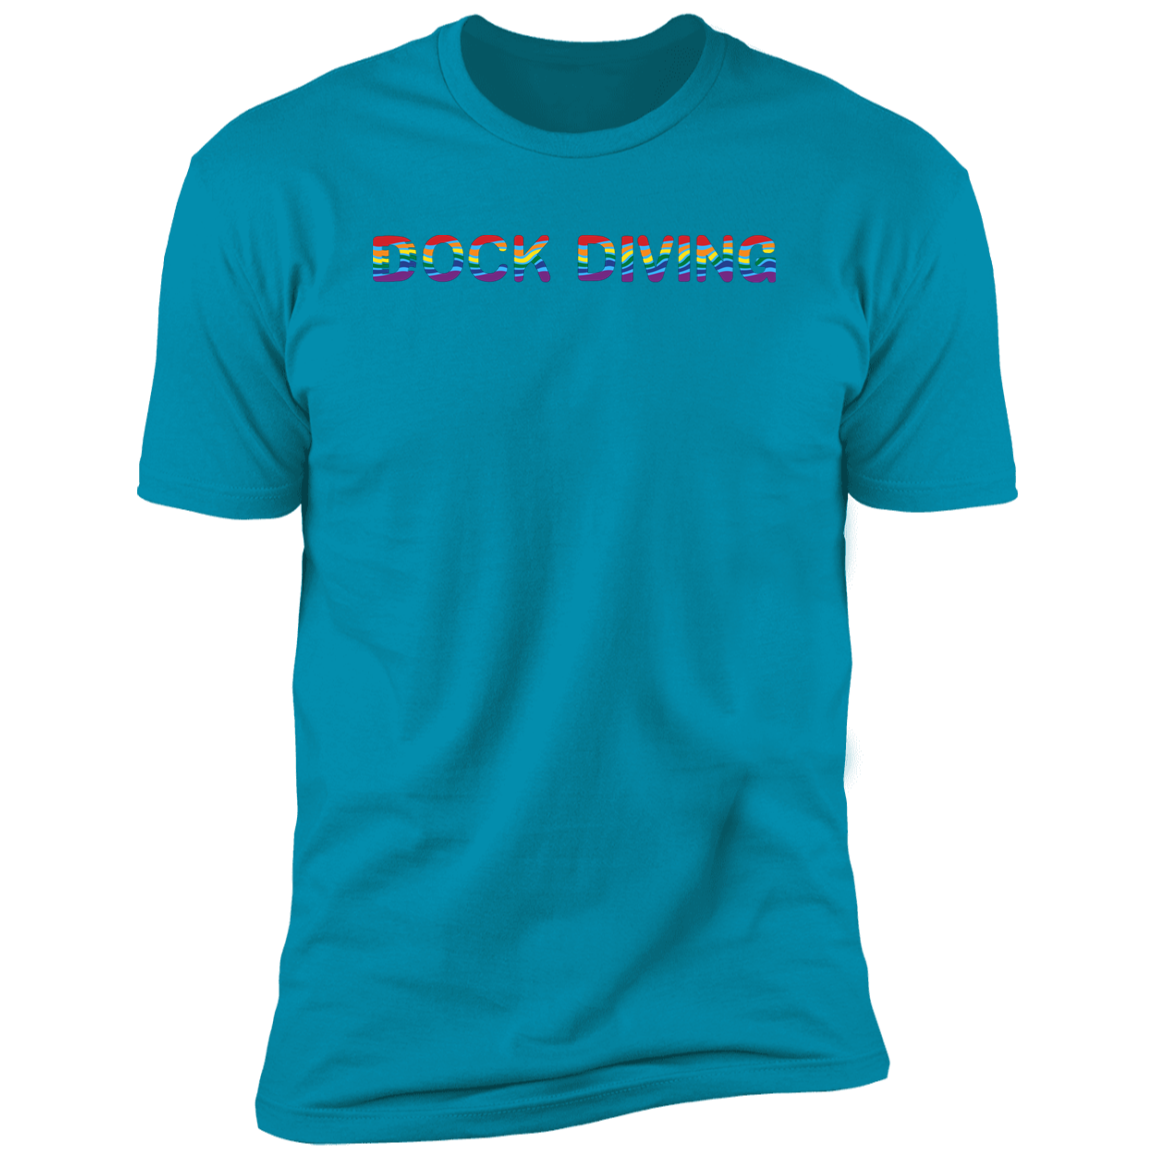 Dock Diving Pride Dock diving t-shirt, dog pride dock diving shirt for humans, in turquoise 